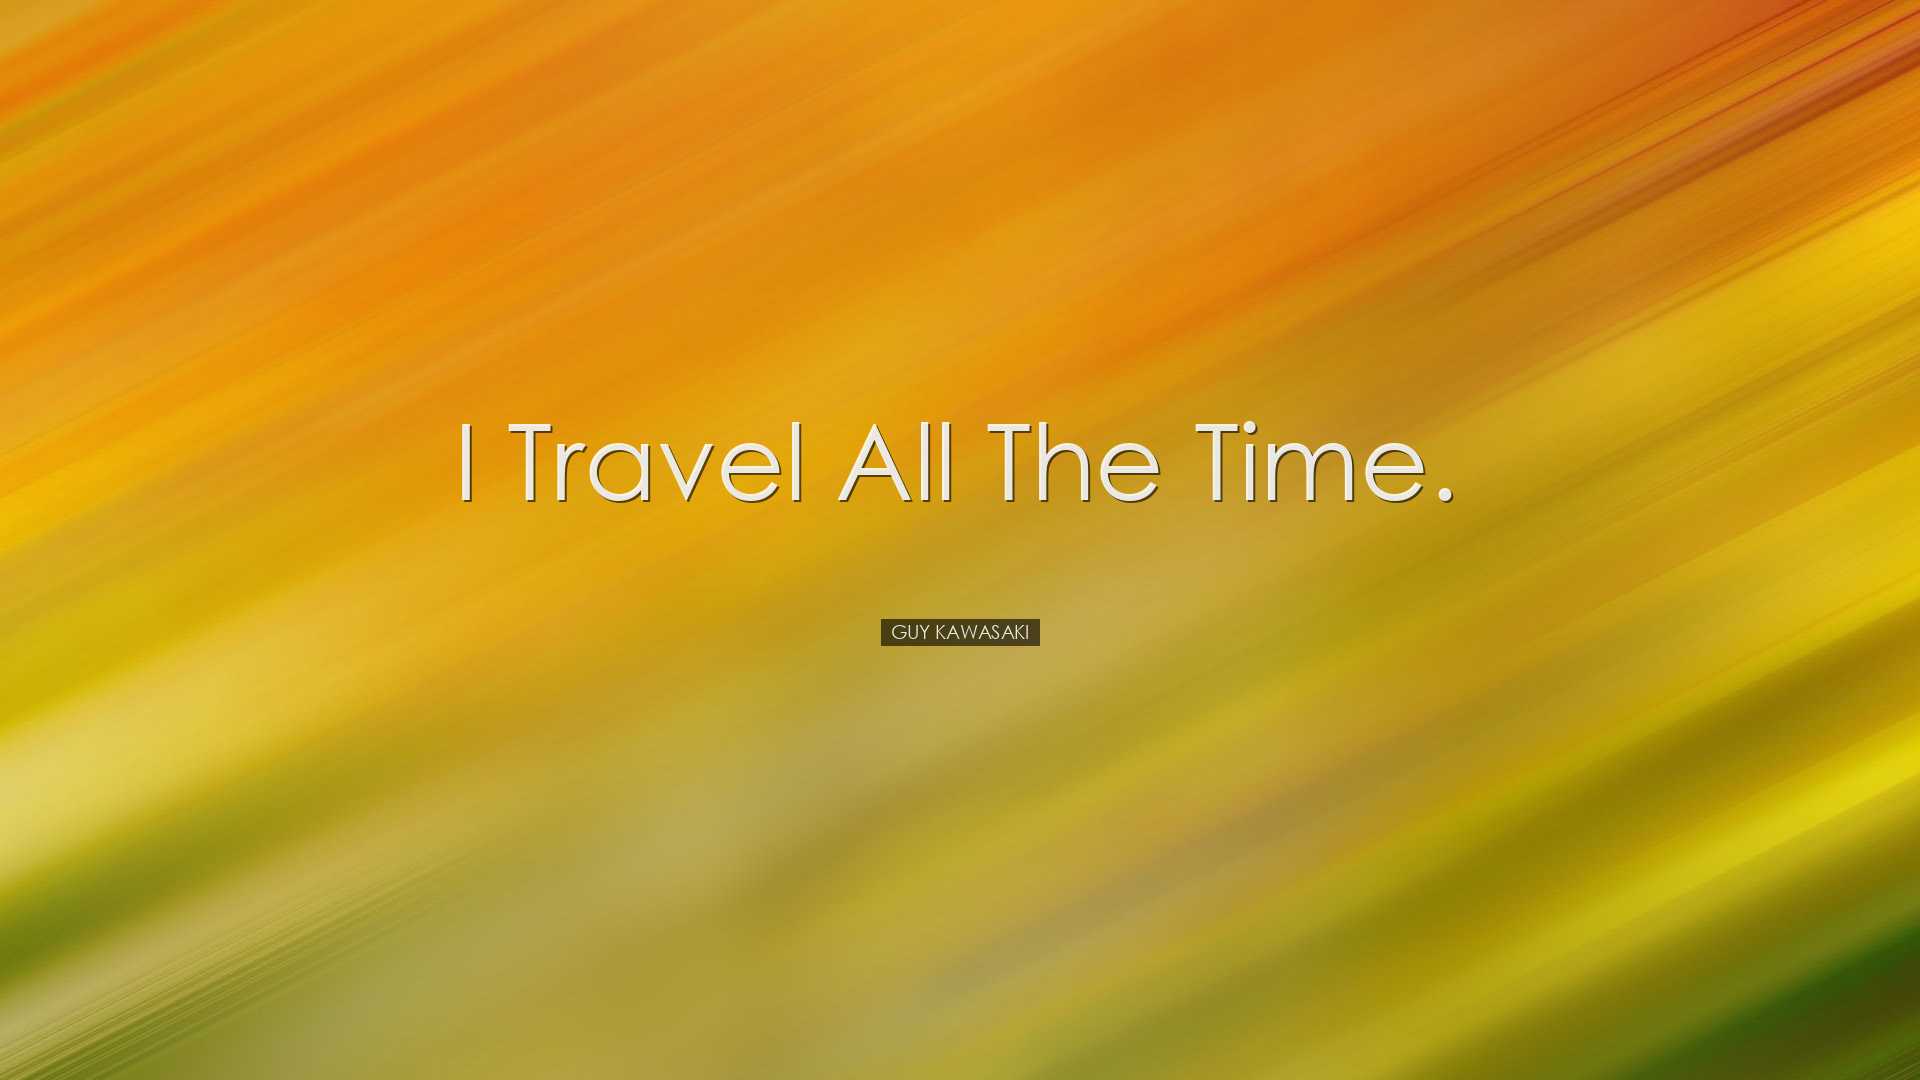 I travel all the time. - Guy Kawasaki